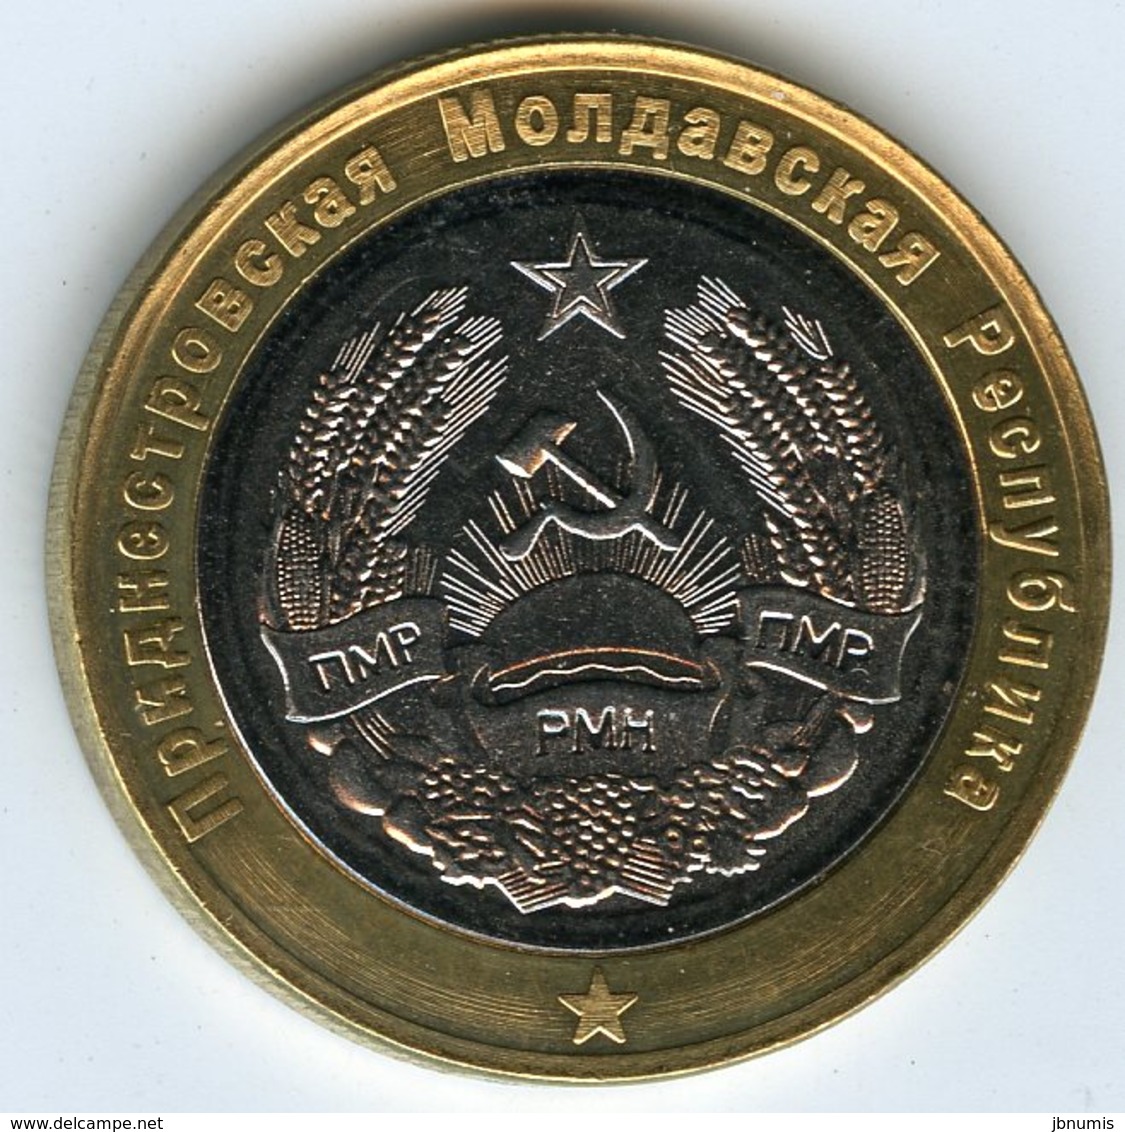 Moldavie Moldova Transdniestrie Transdnistria 100 Rublei 2011 Jean-Paul II Pape Pope UNC - Moldavia